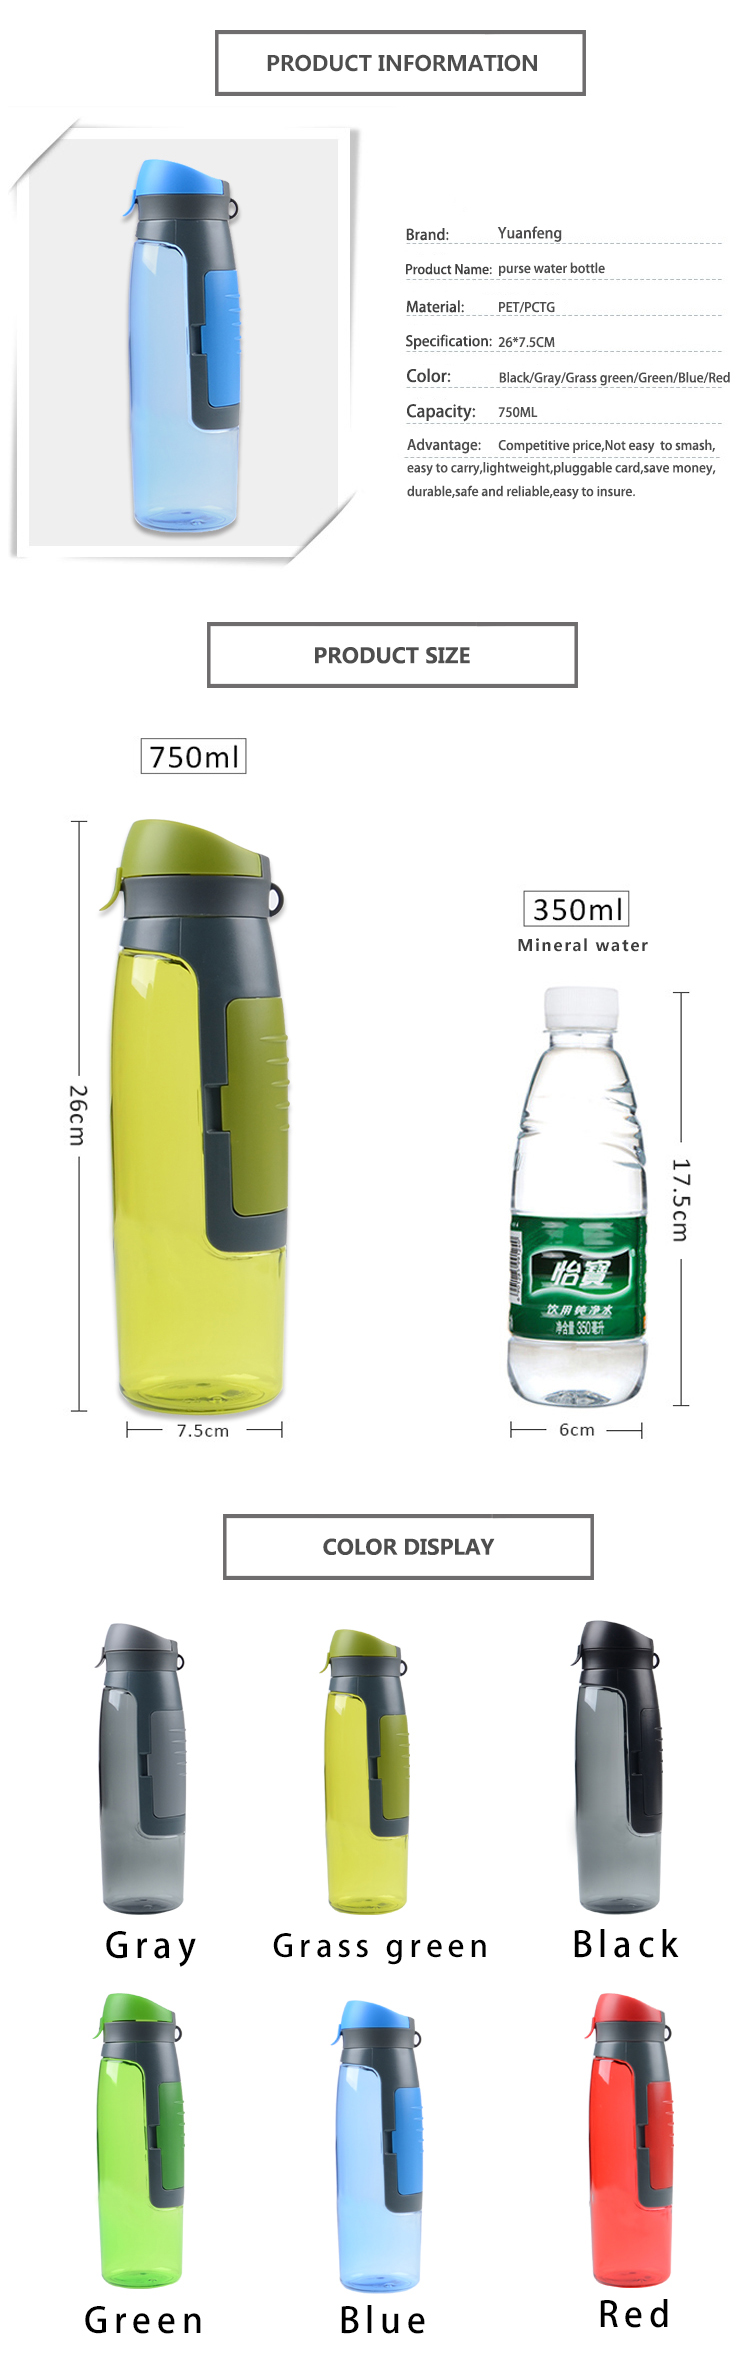 storage attachment wallet patent outdoor sports drinking water bottle 5